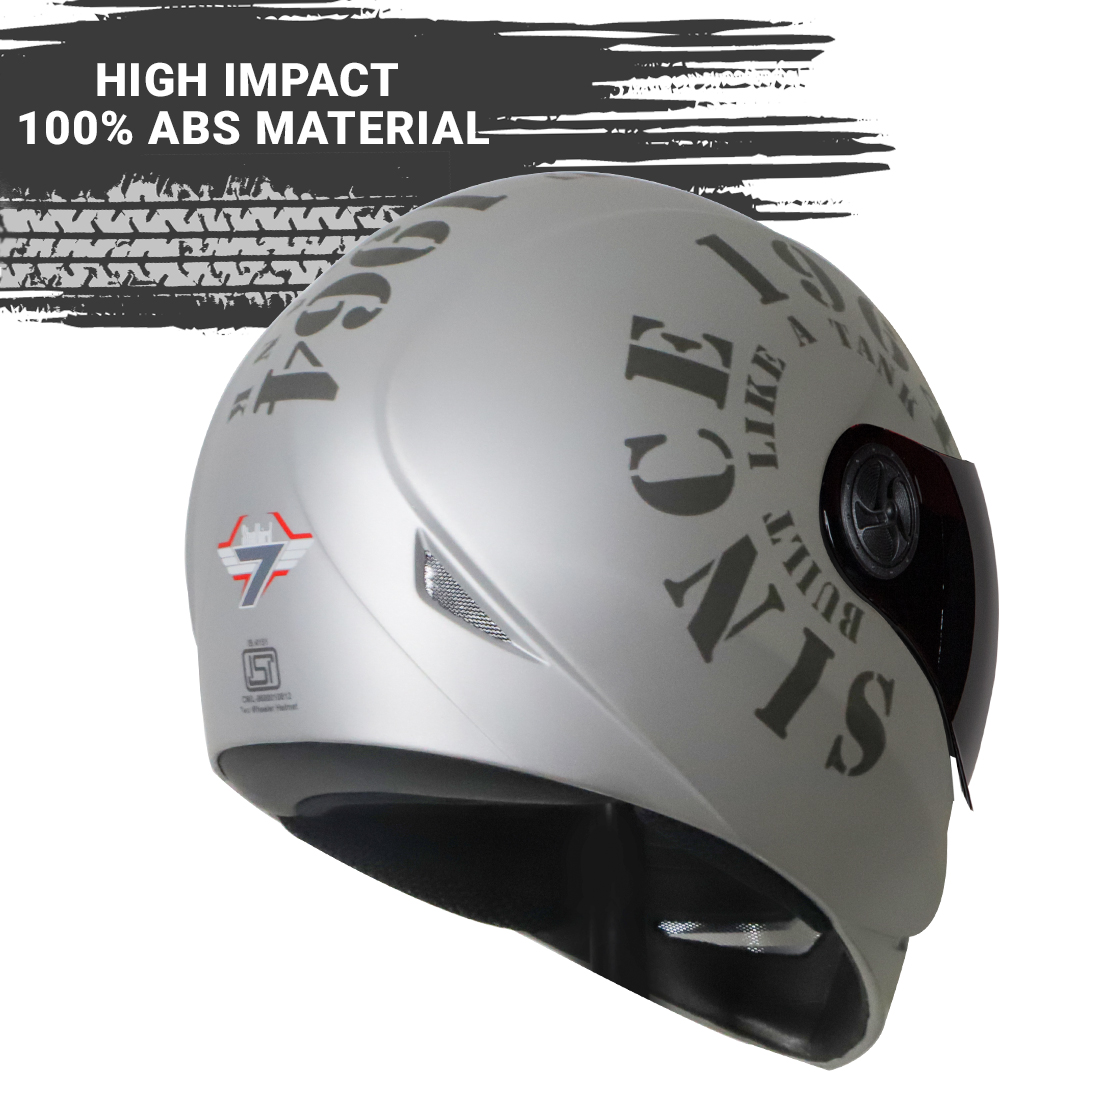 Steelbird SB-50 Adonis Tank Full Face Graphic Helmet Motorbike Helmet (Matt Silver Grey With Smoke Visor)